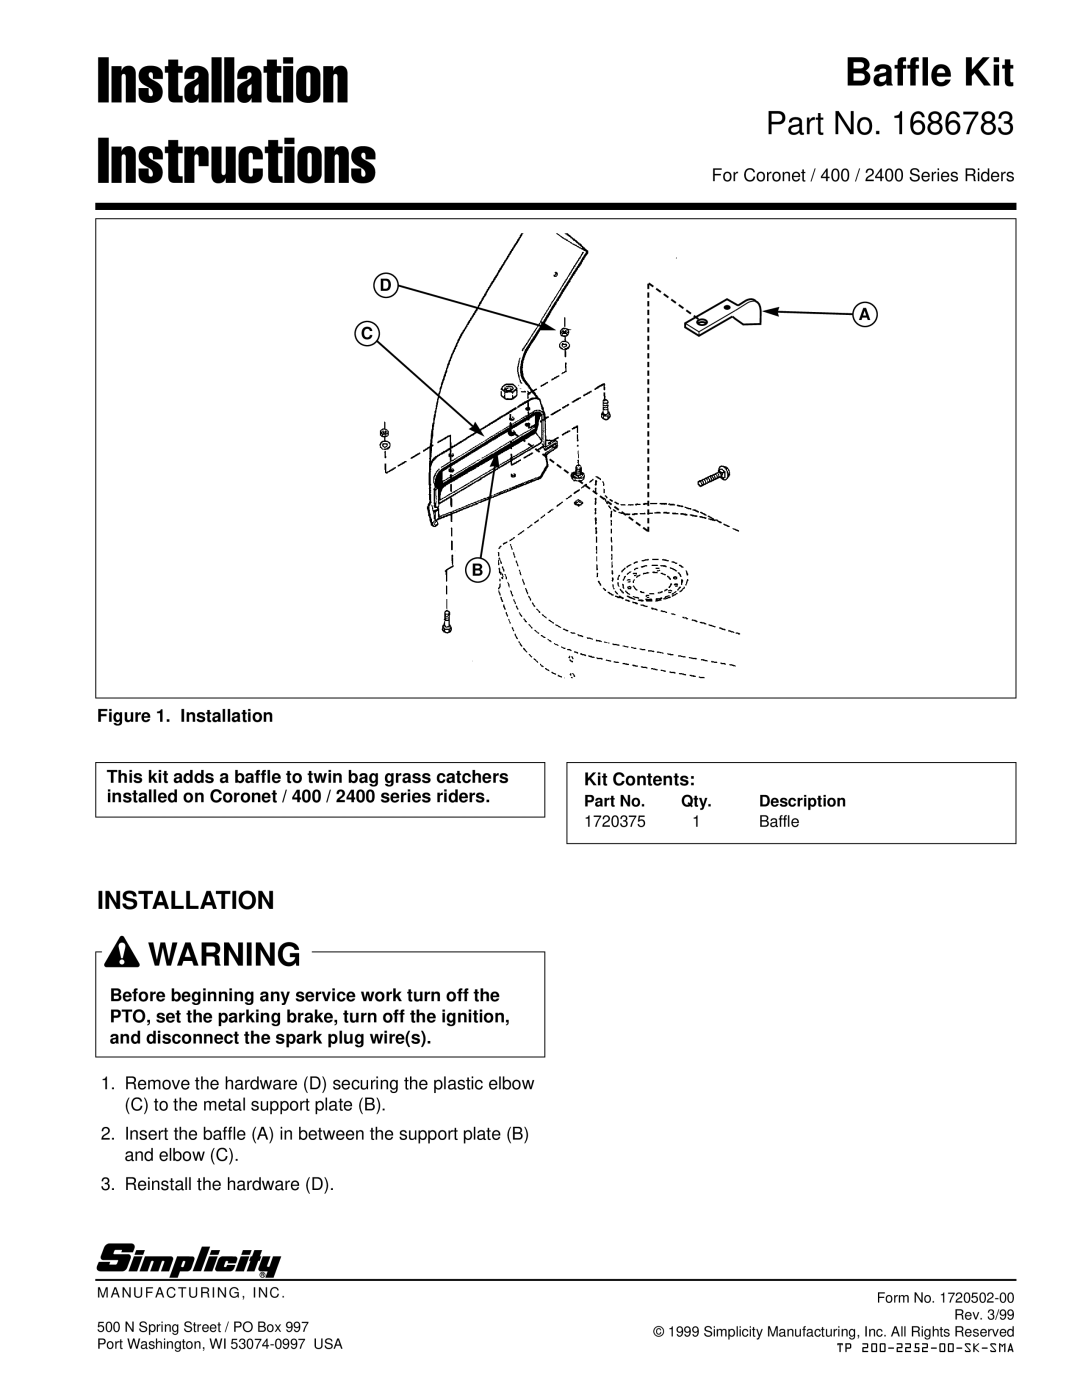 Simplicity 1692149, 1692150 instruction sheet Baffle Kit, Installation Instructions 